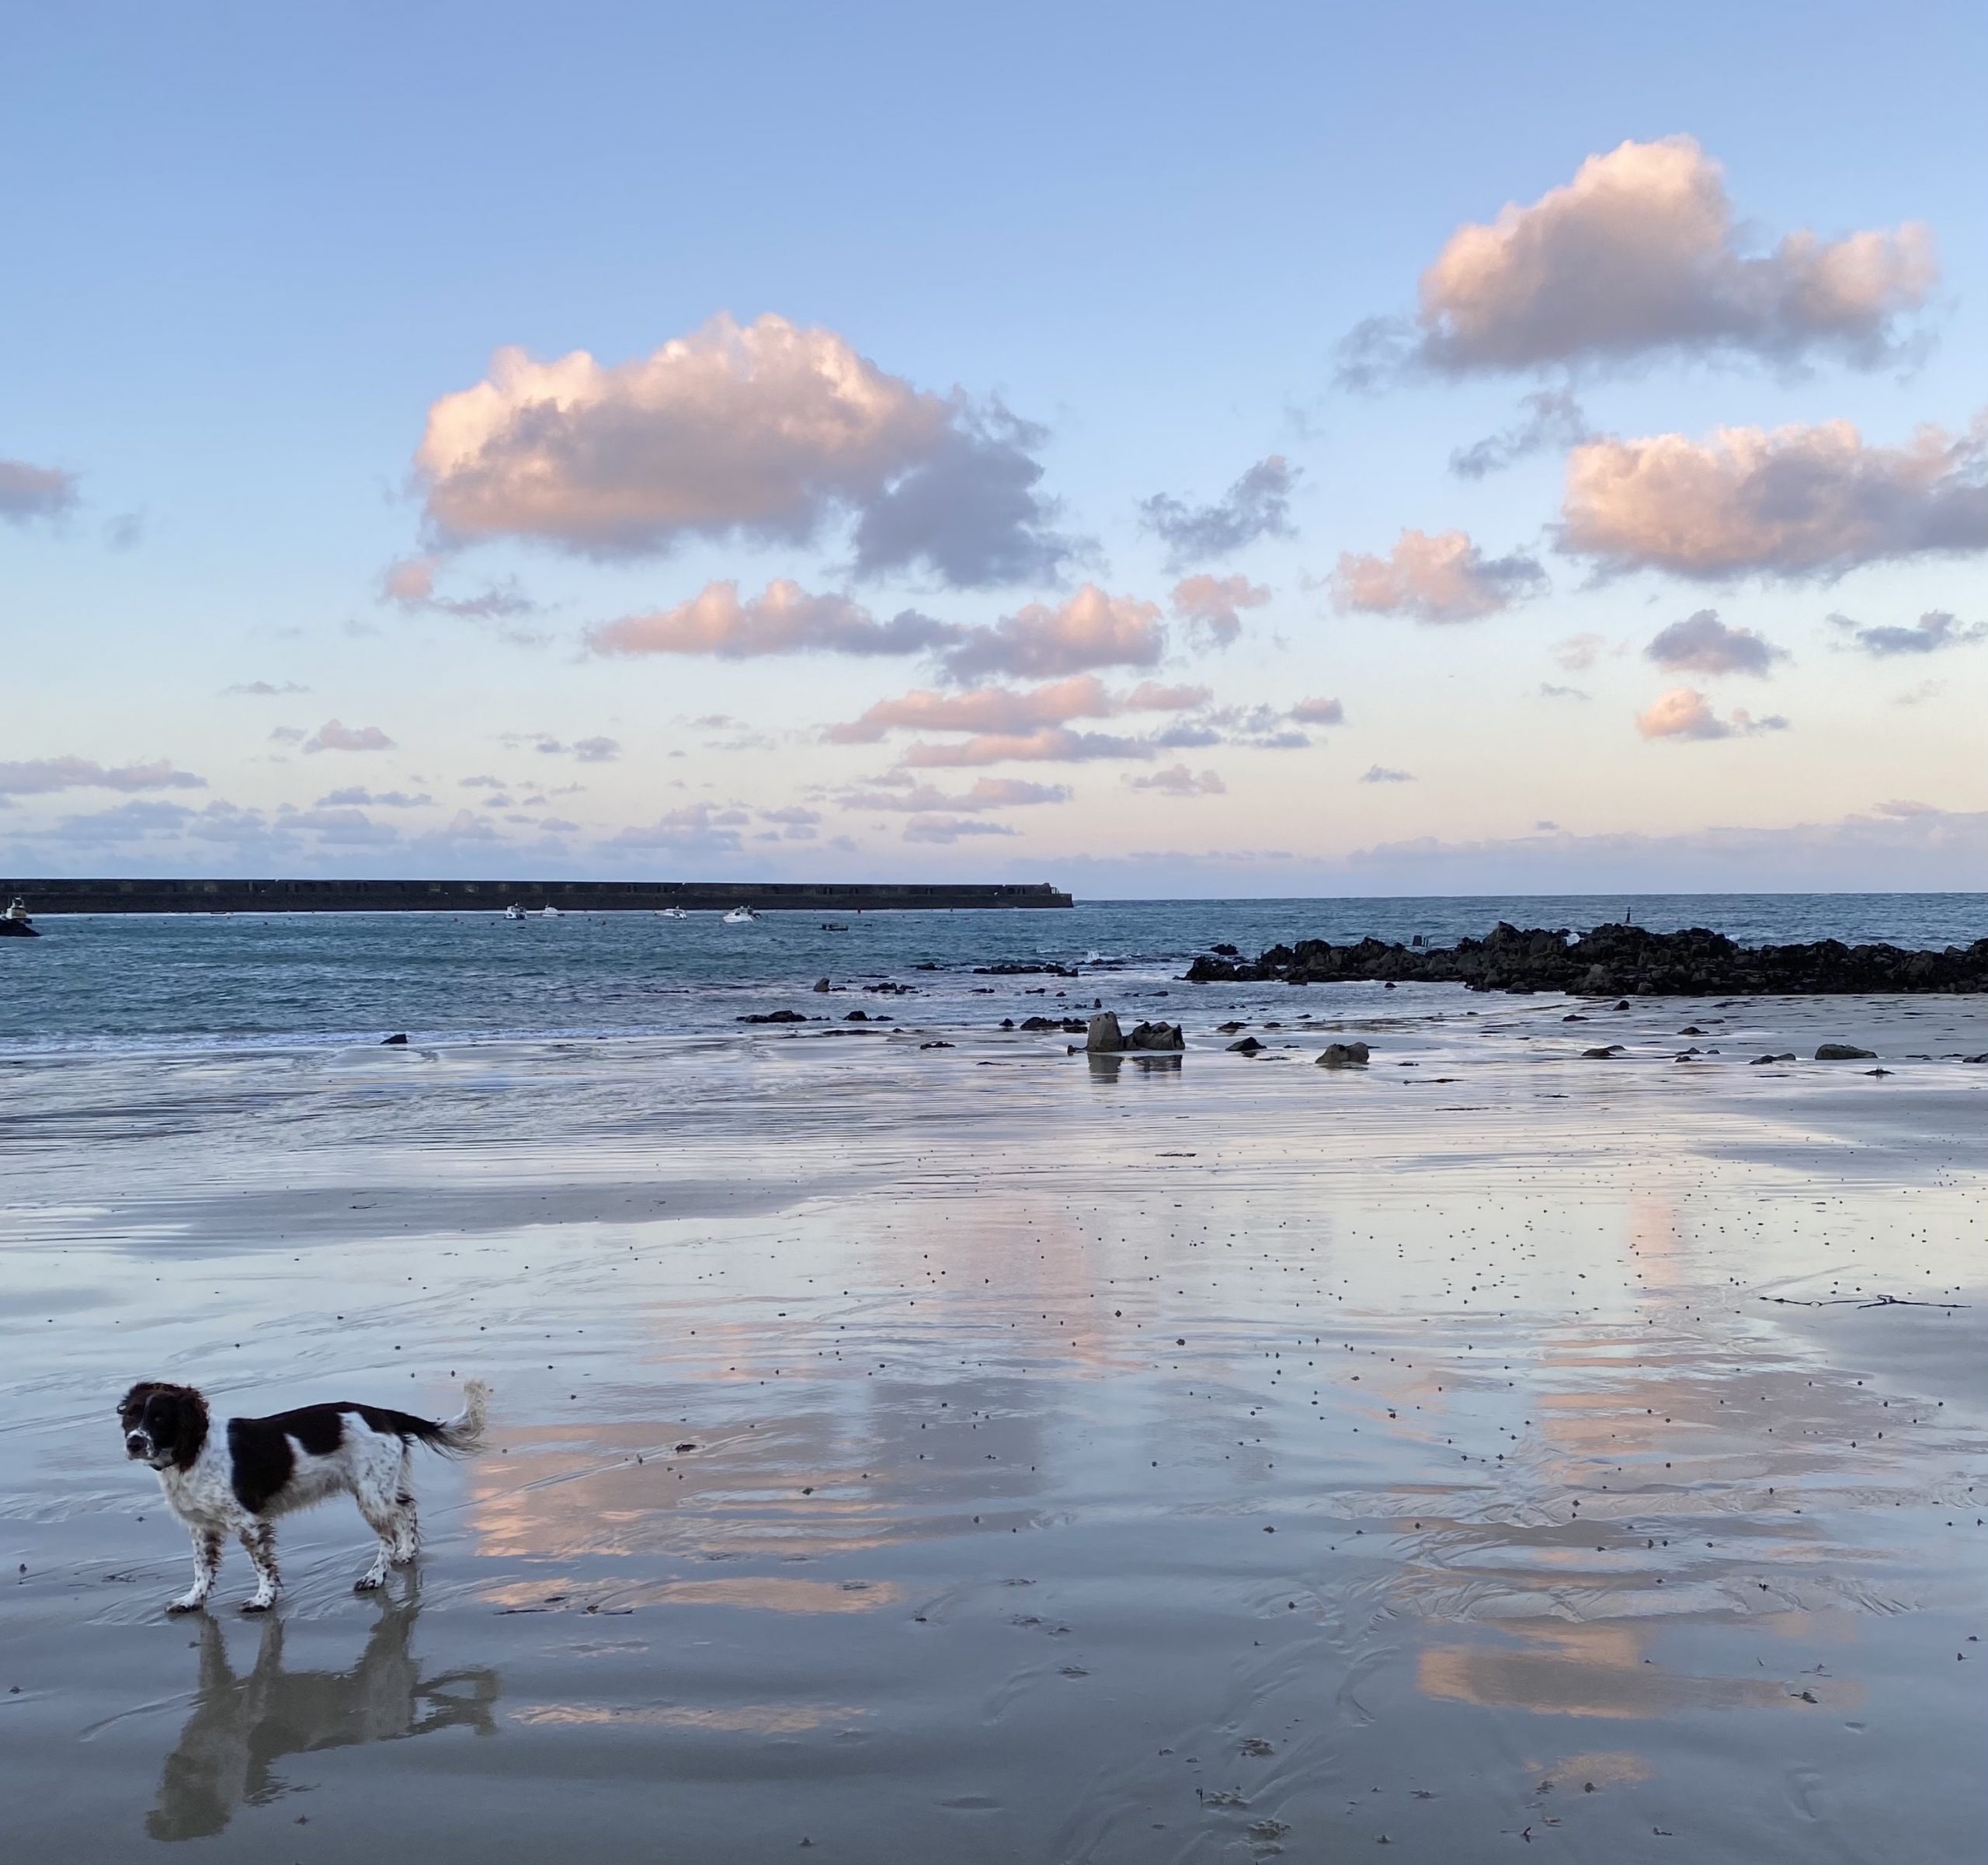 A photograph of a King Charles Spanial dog on a beach.